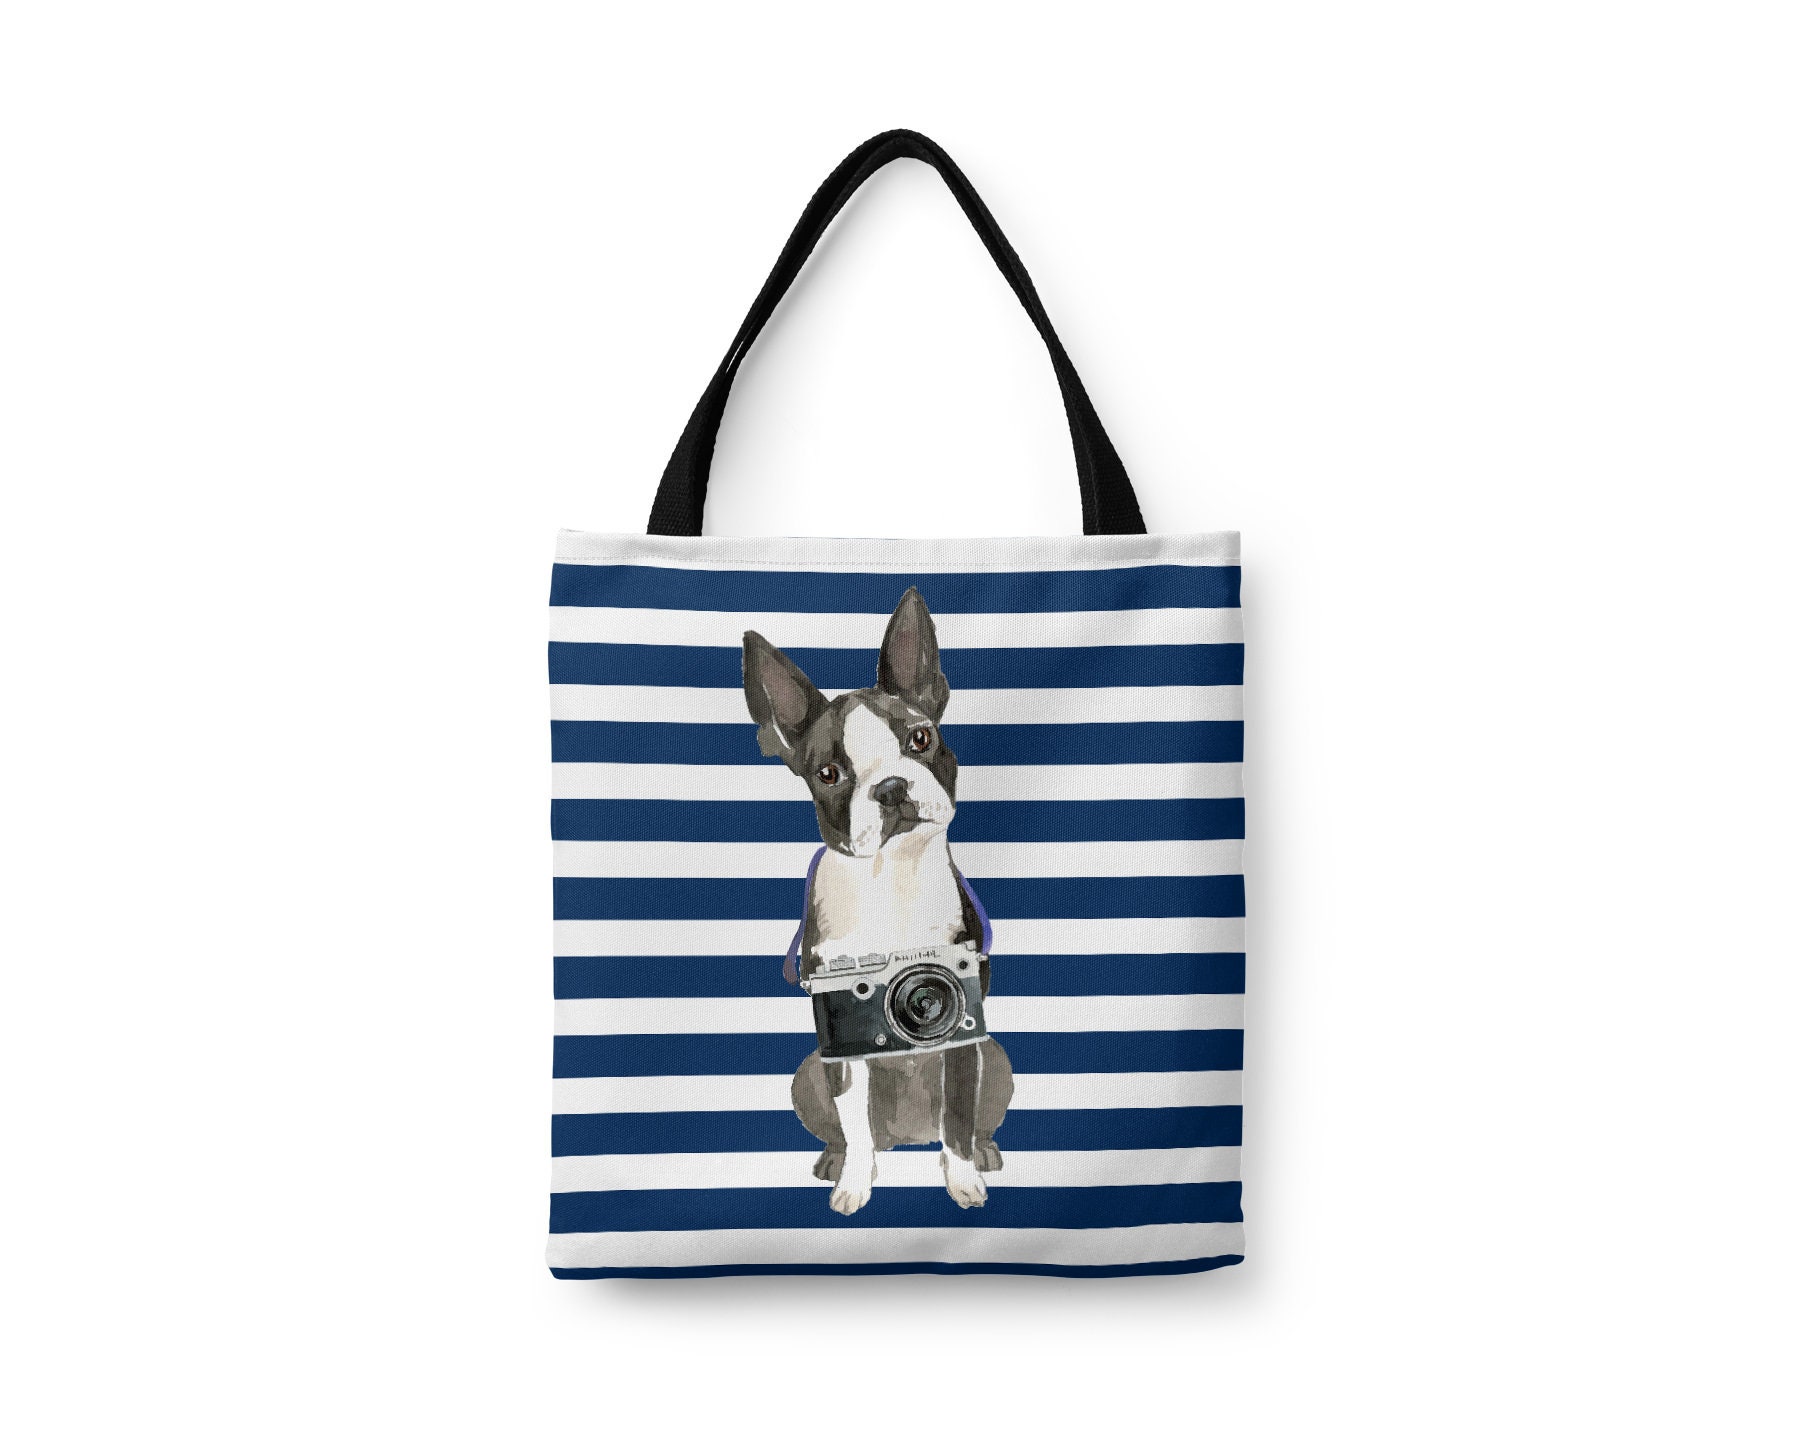 Boston Terrier Tote Bag - Illustrated Dogs & 6 Travel Inspired Styles. All Purpose For Work, Shopping, Life. Bull, Gentlemen, Boxwood Dog